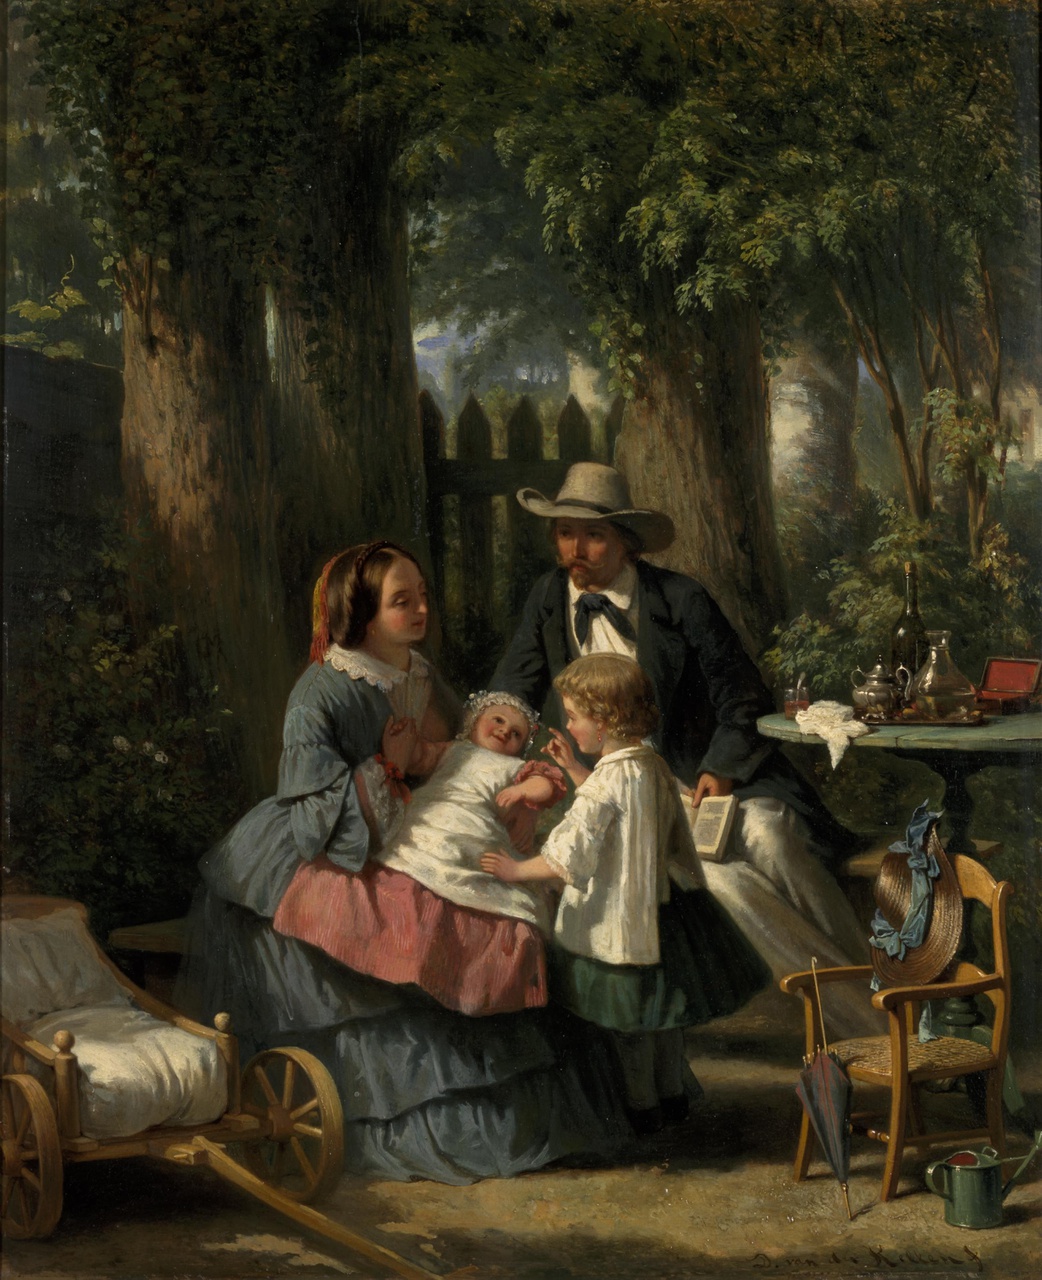 David van der Kellen (1827-1895), Anna Wilhelmina van der Kellen (1829-1885) en hun kinderen Anna Catharina (1852-?) en Henriëtte Frederika (1854-?)